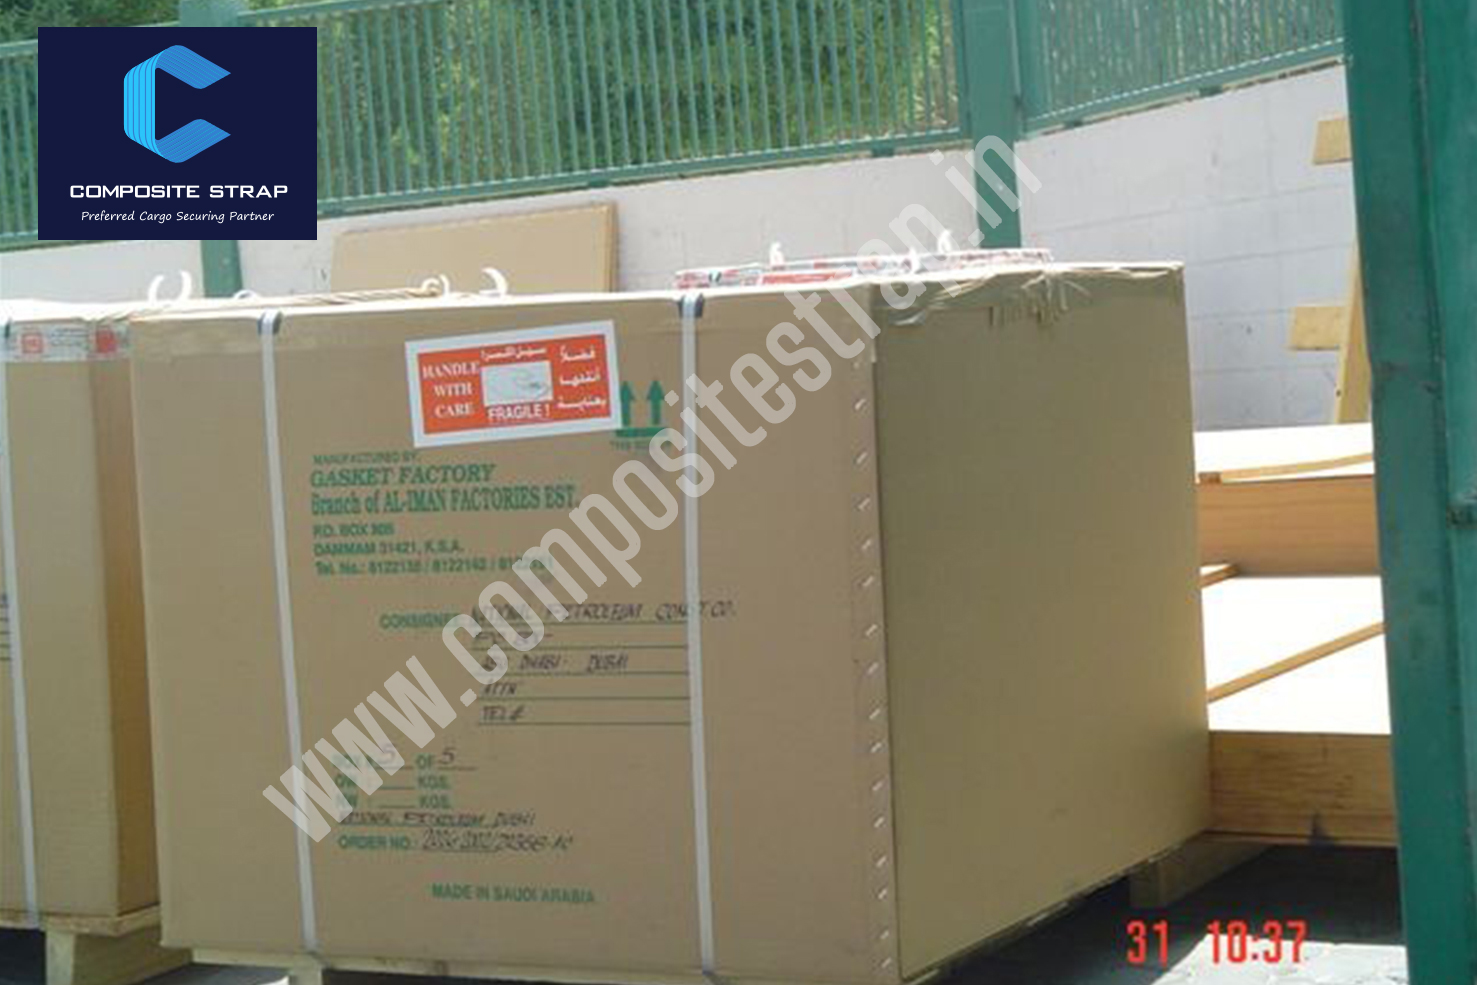 Cargo Securing Services - Composite Strap